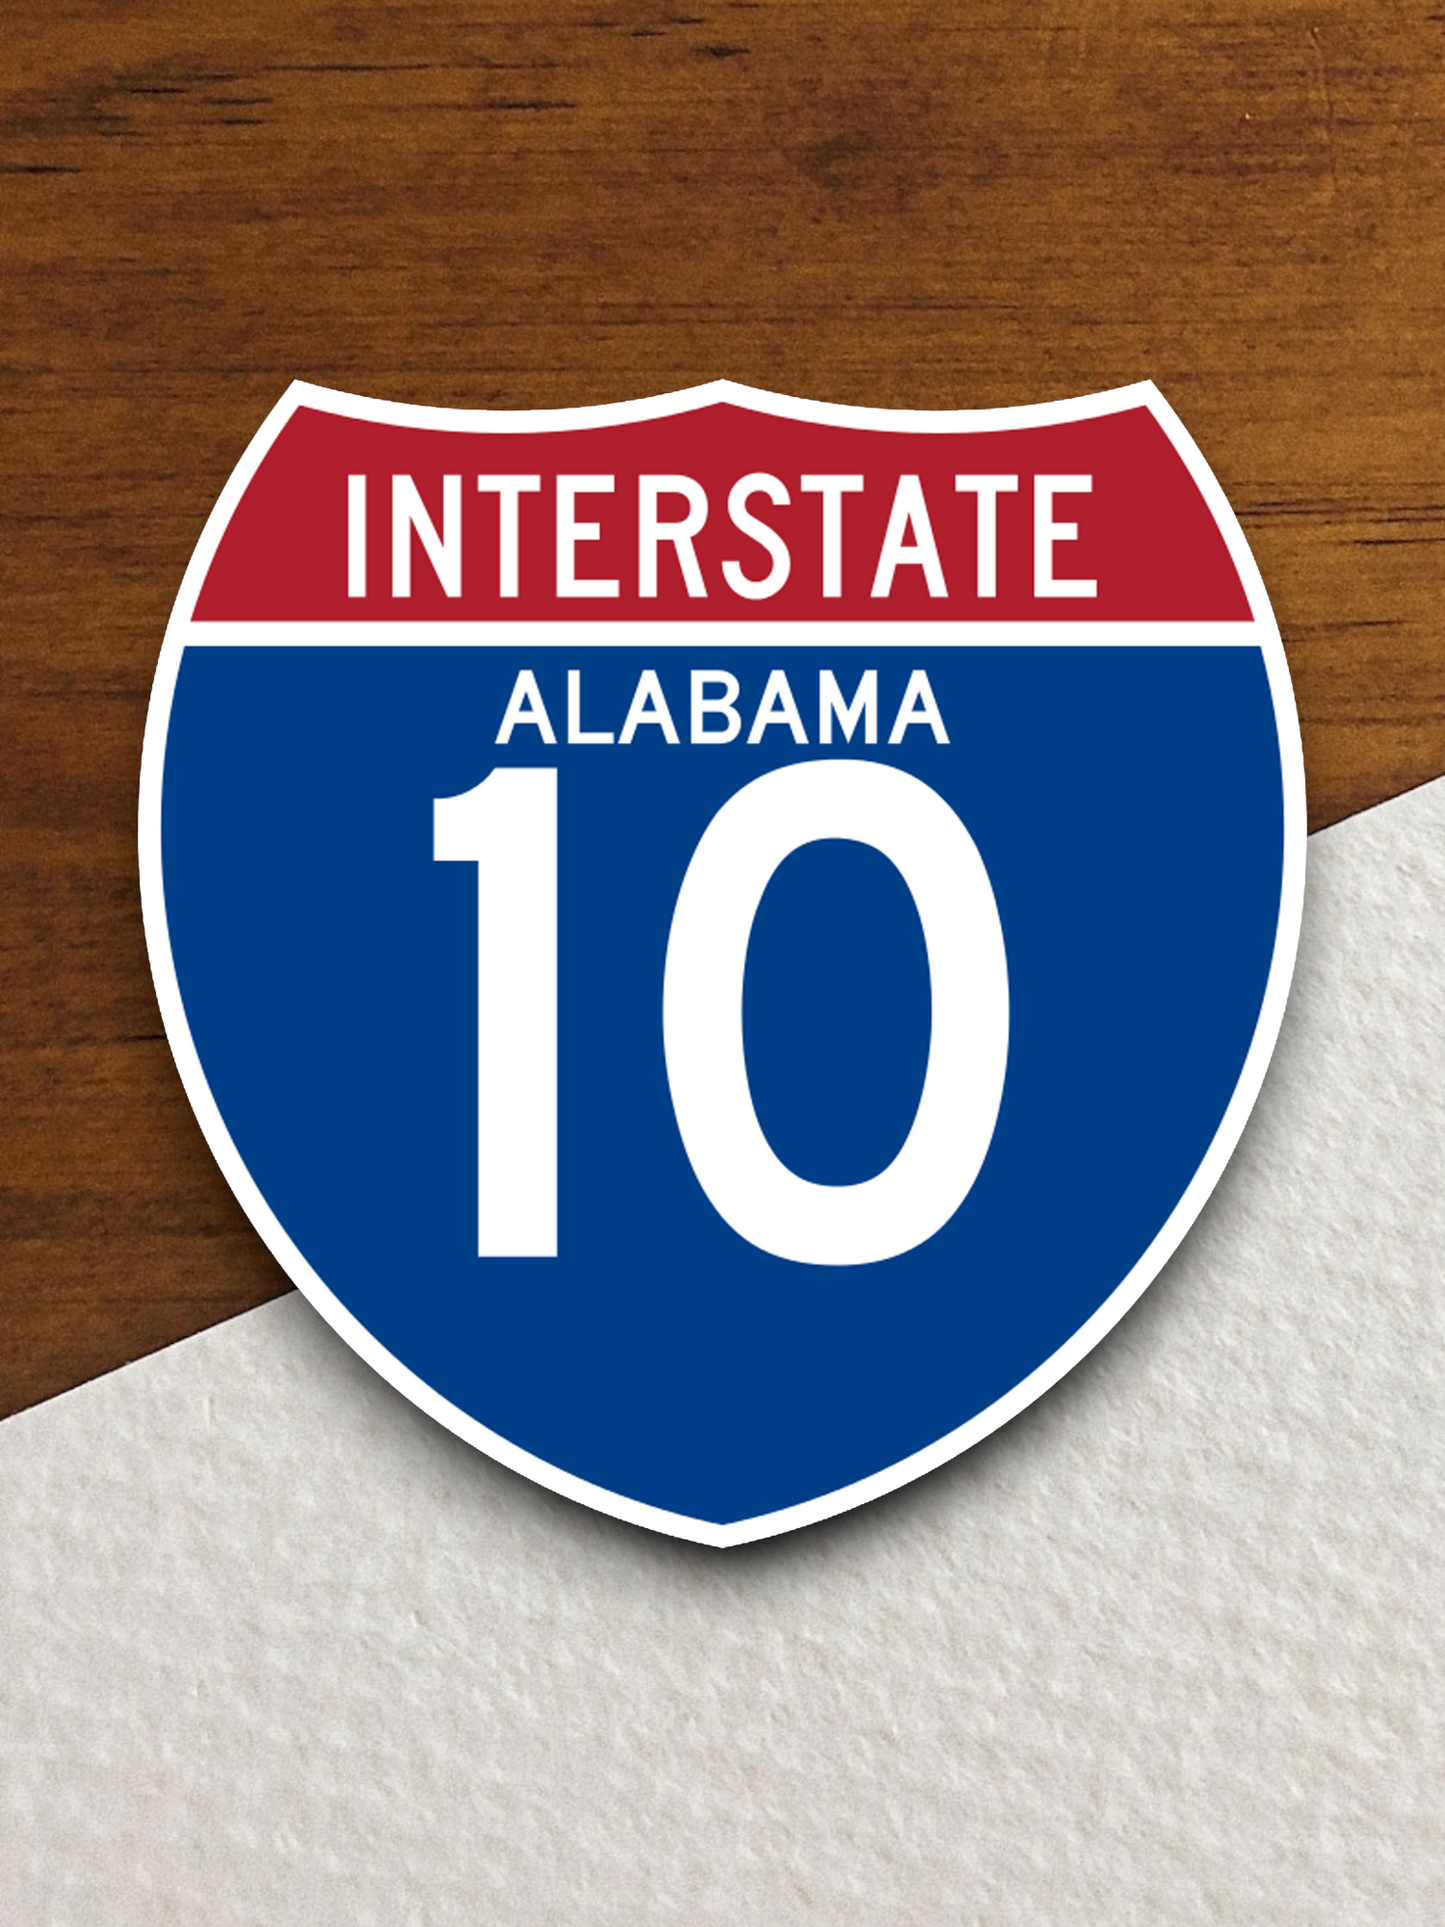 Interstate I-10 Alabama - Road Sign Sticker